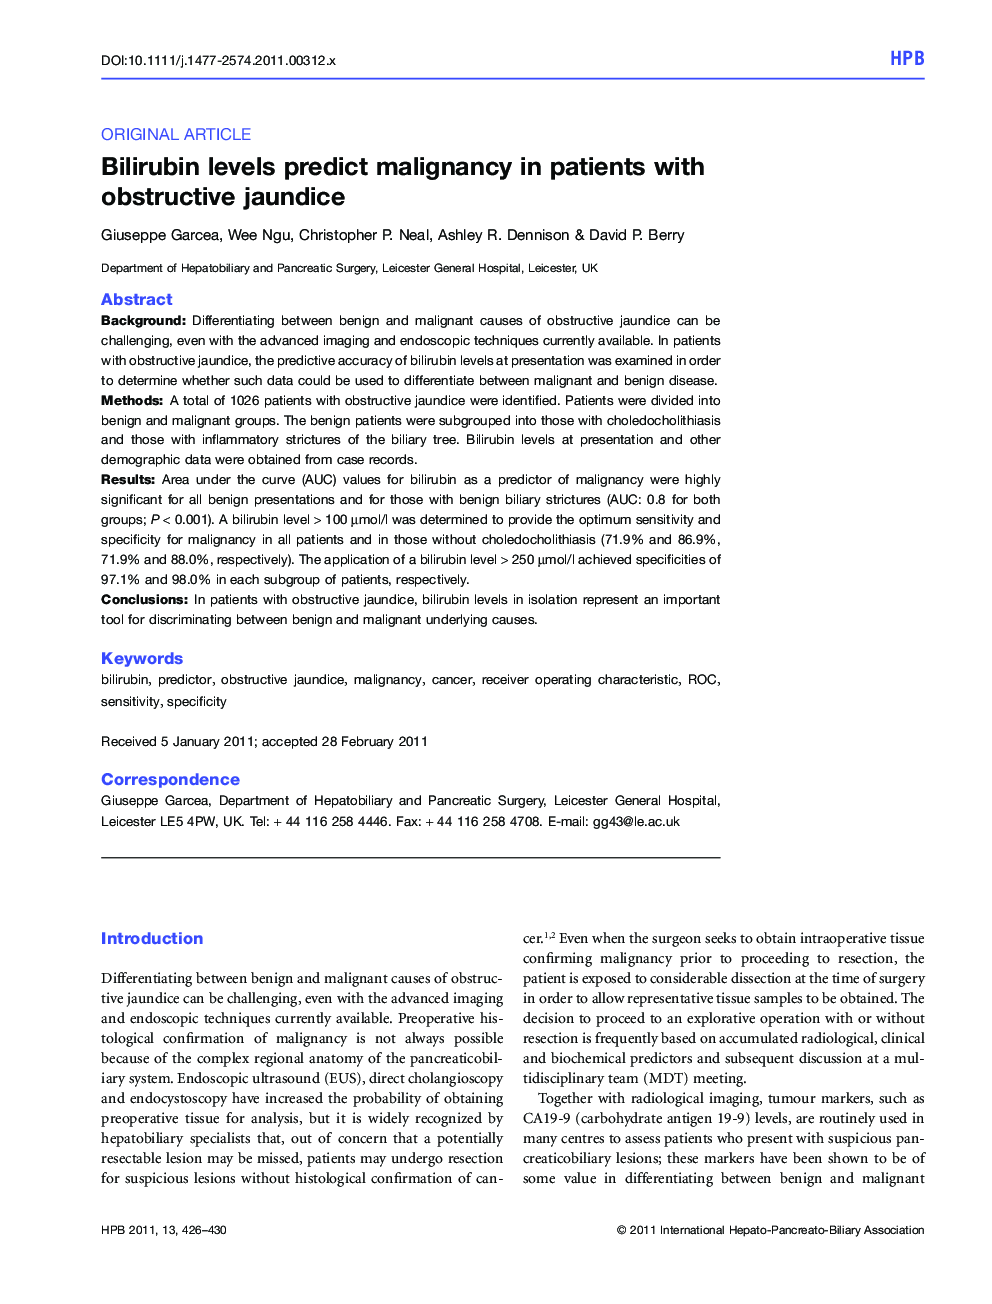 Bilirubin levels predict malignancy in patients with obstructive jaundice